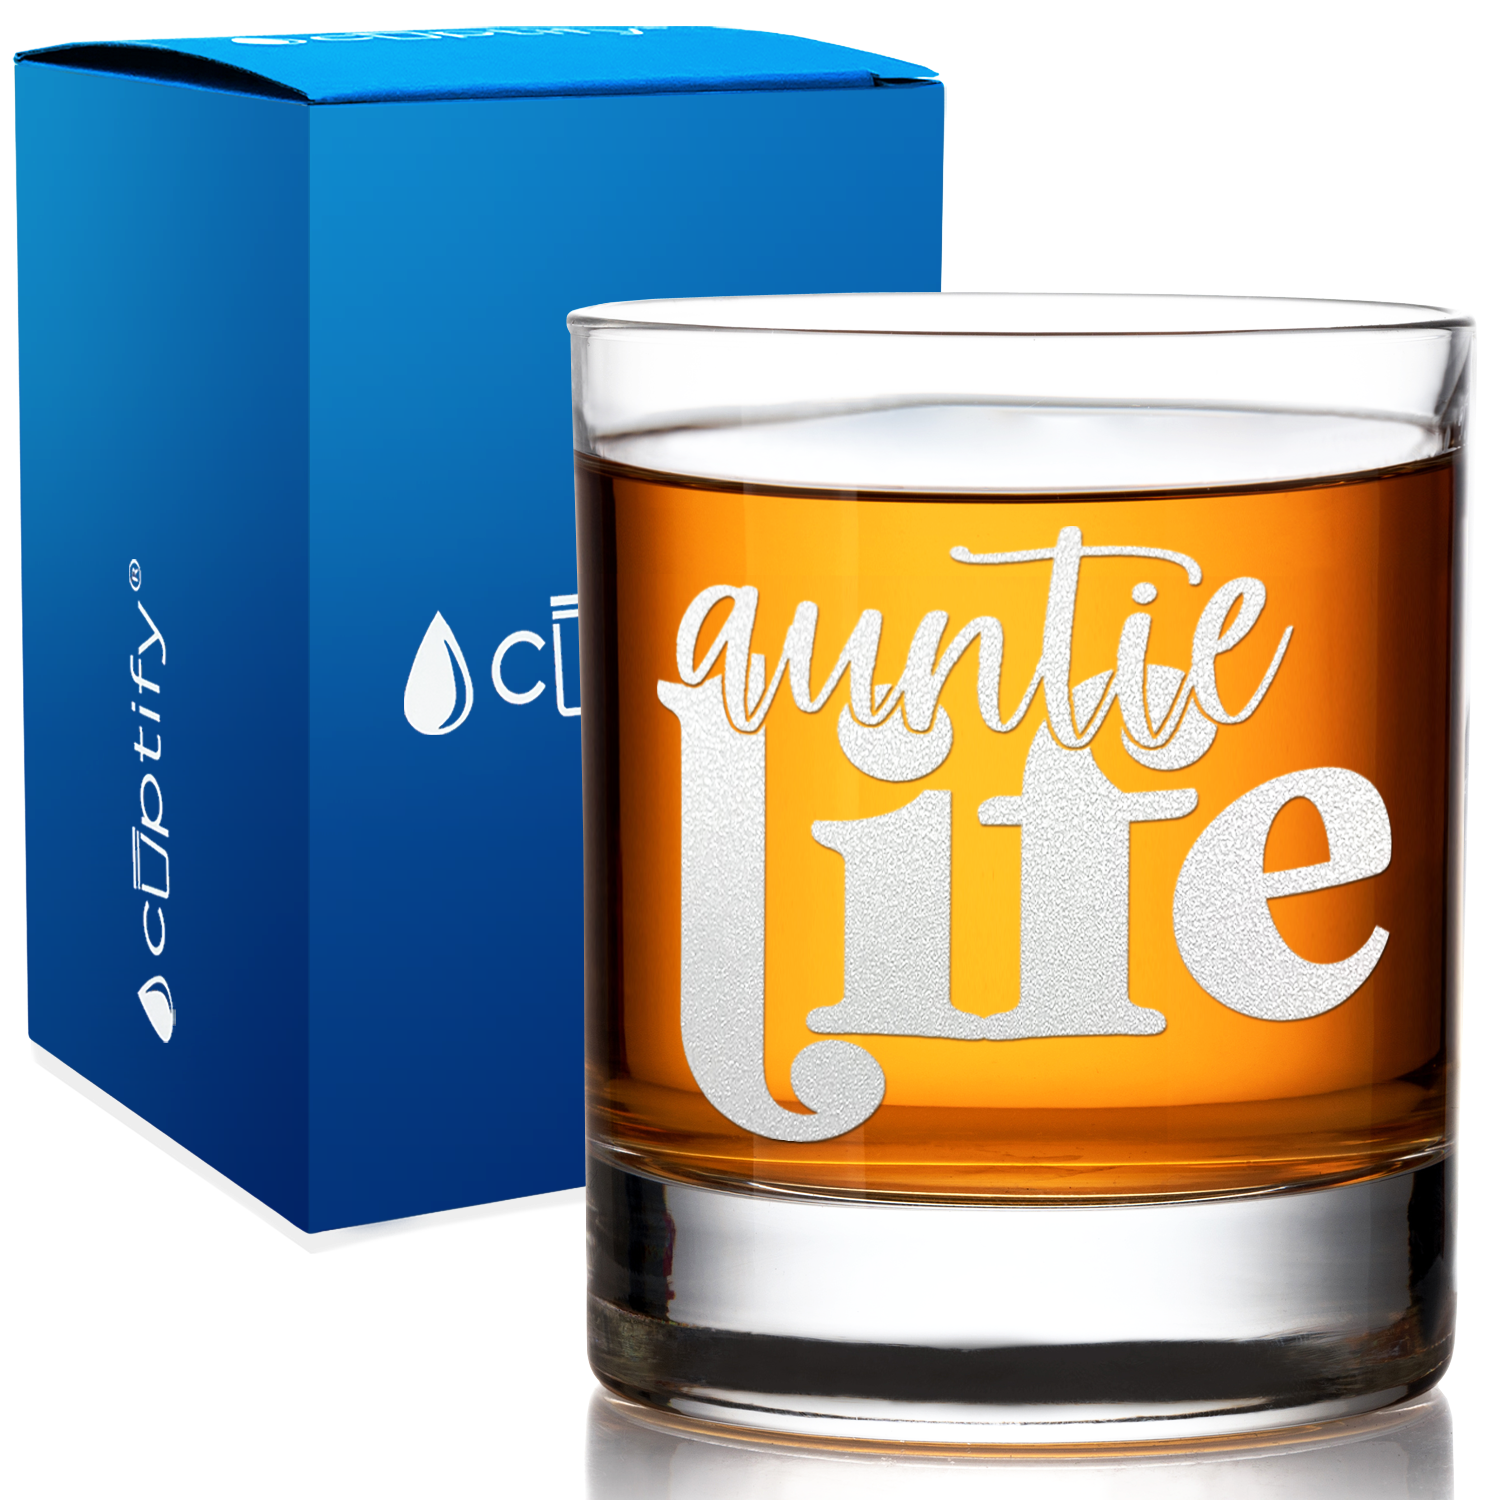 Auntie Life 10.25oz Whiskey Glass